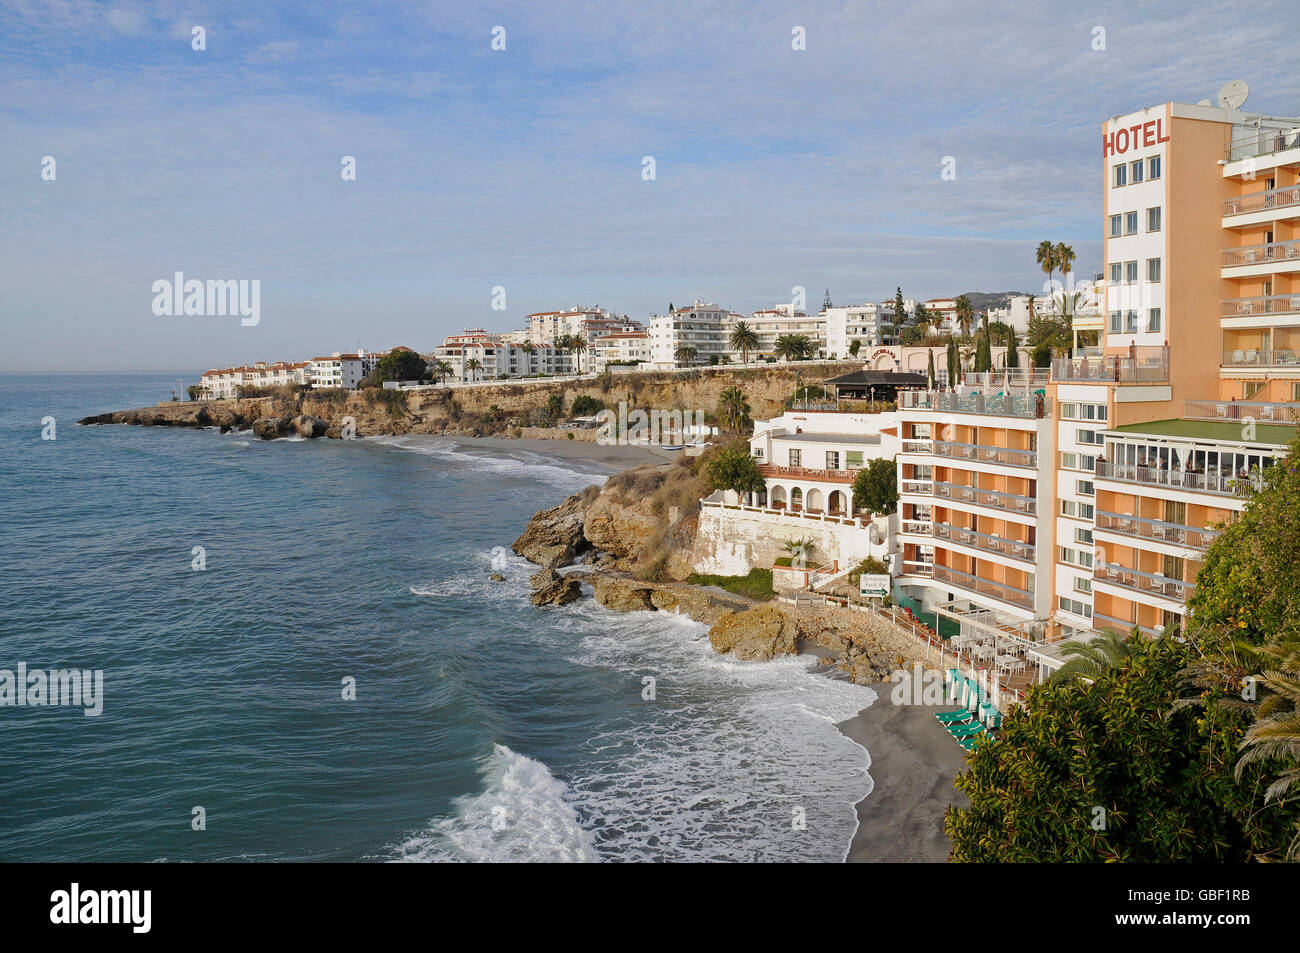 Hotel, Playa El Salon, beach, Nerja, Malaga Province, Costa del Sol, Andalusia, Spain, Europe Stock Photo